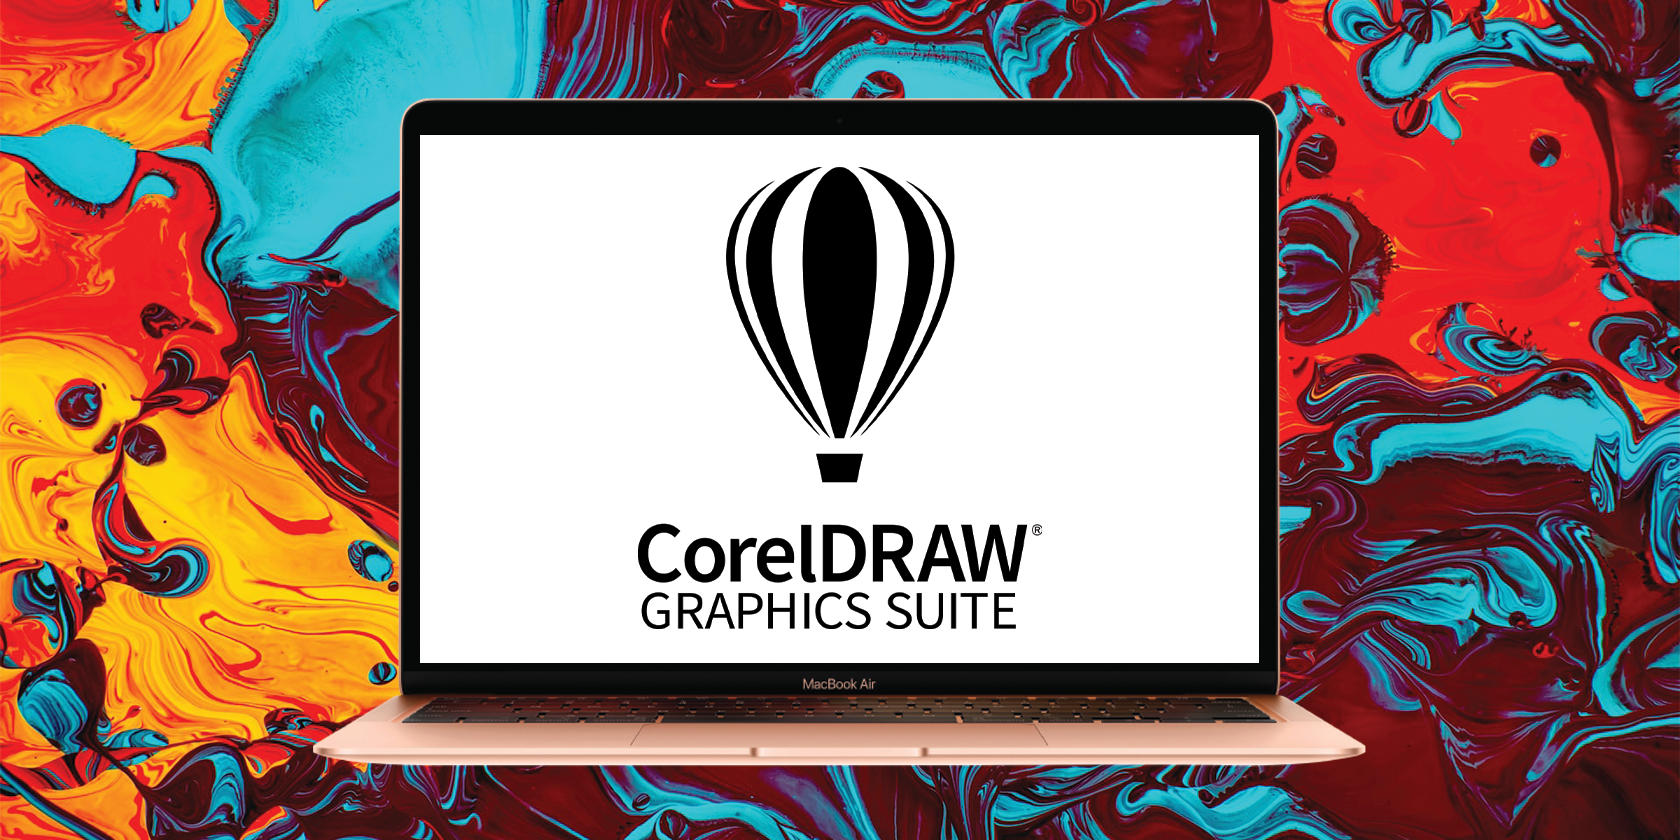 coreldraw graphics